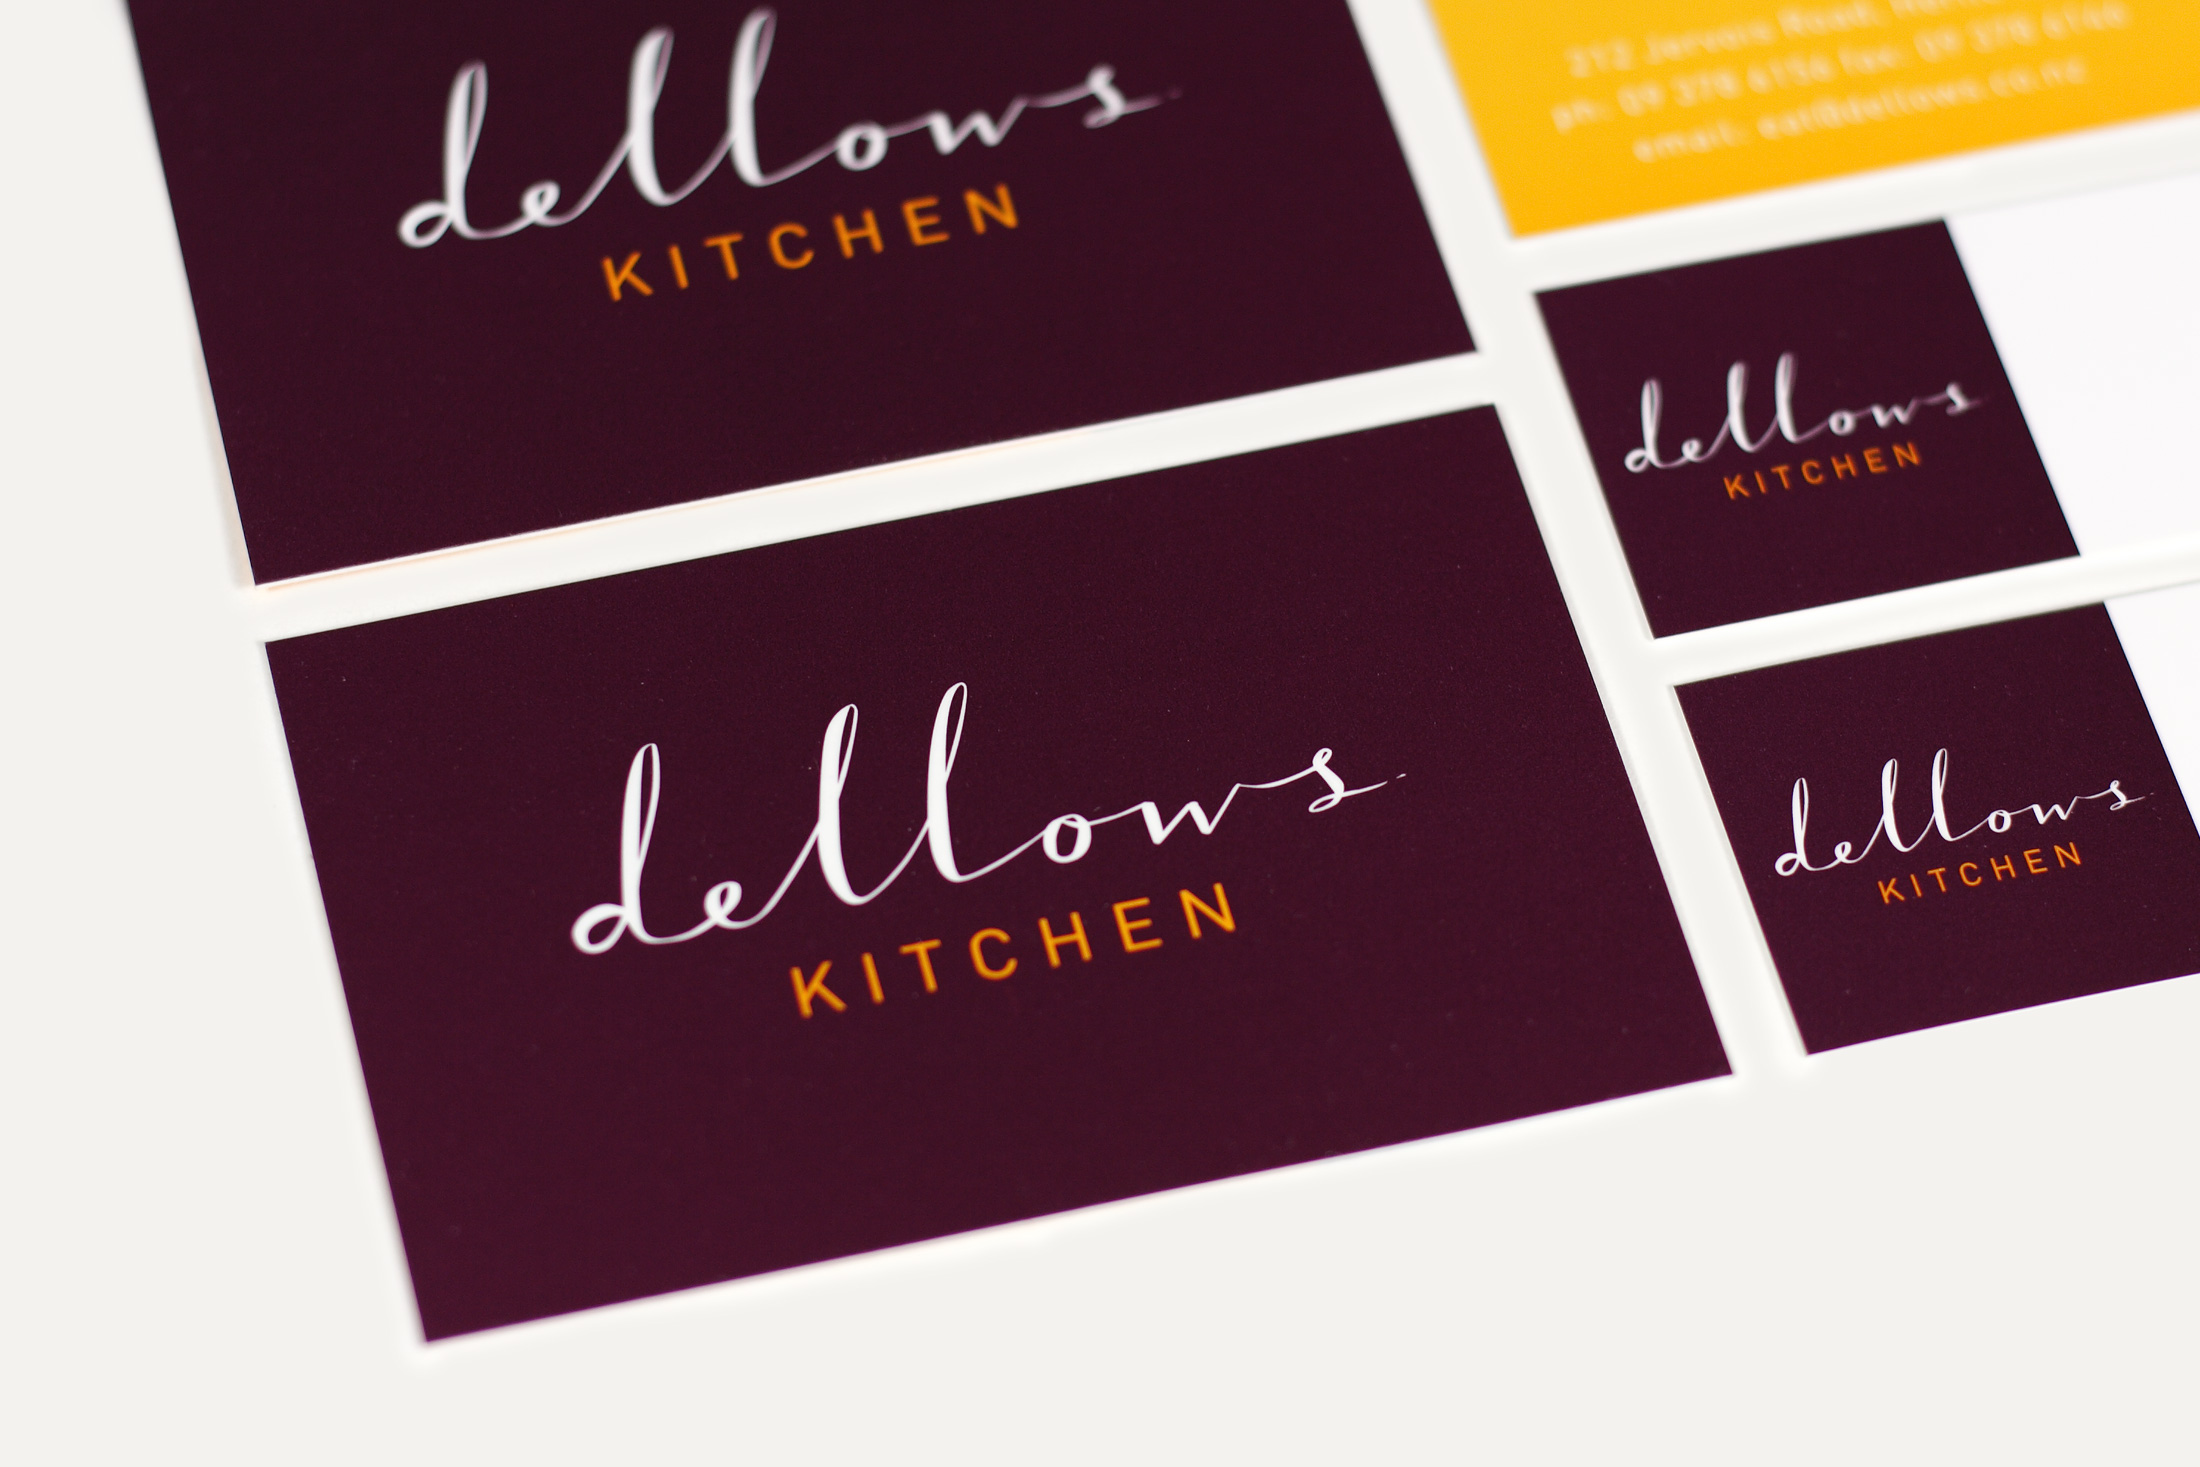  Dellows Kitchen 